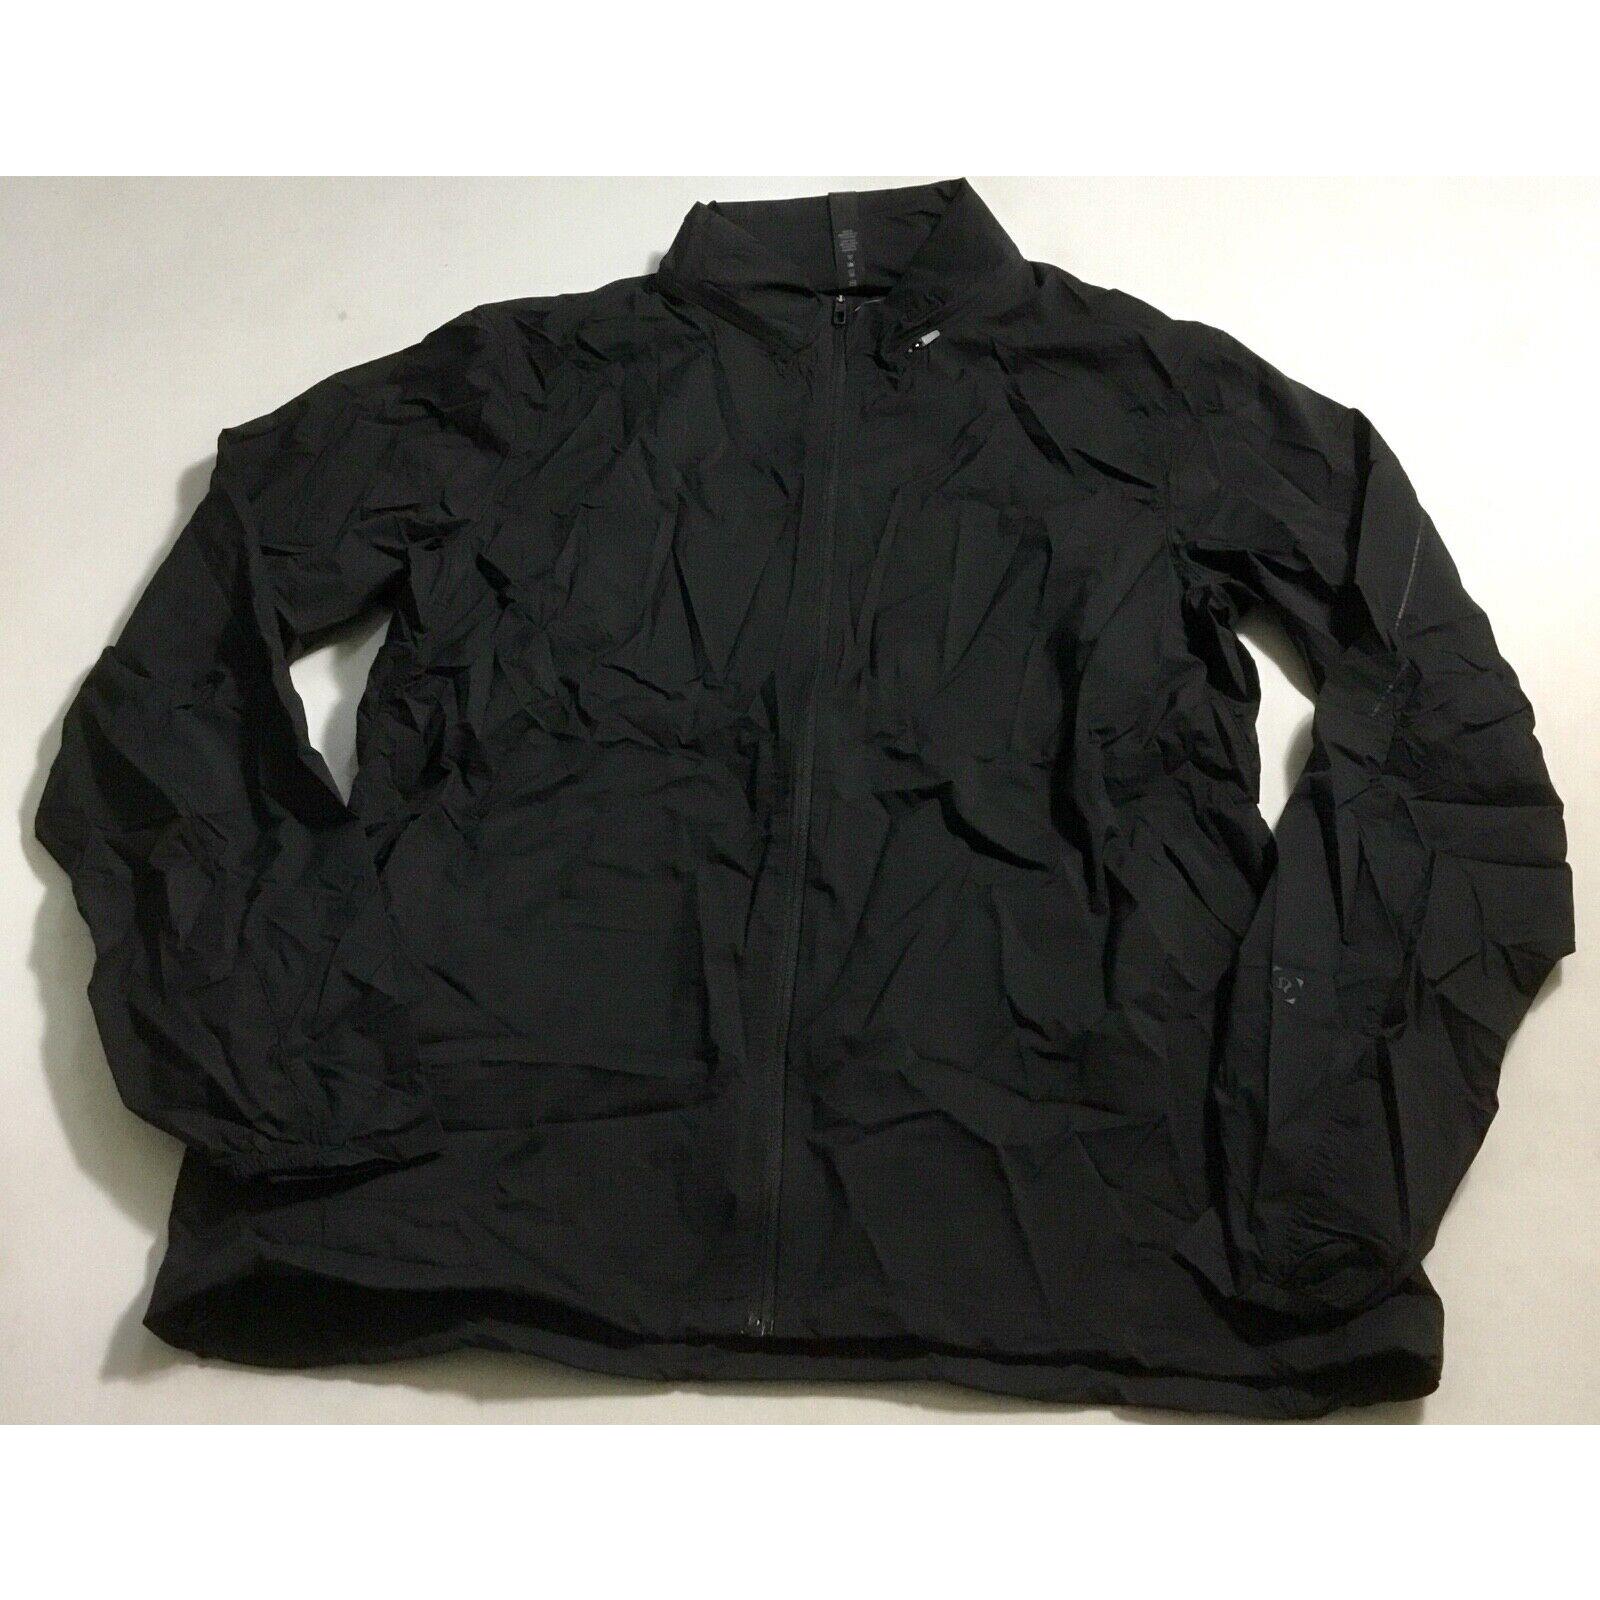 Lululemon Men s Active Jacket Black LM4686S Size S